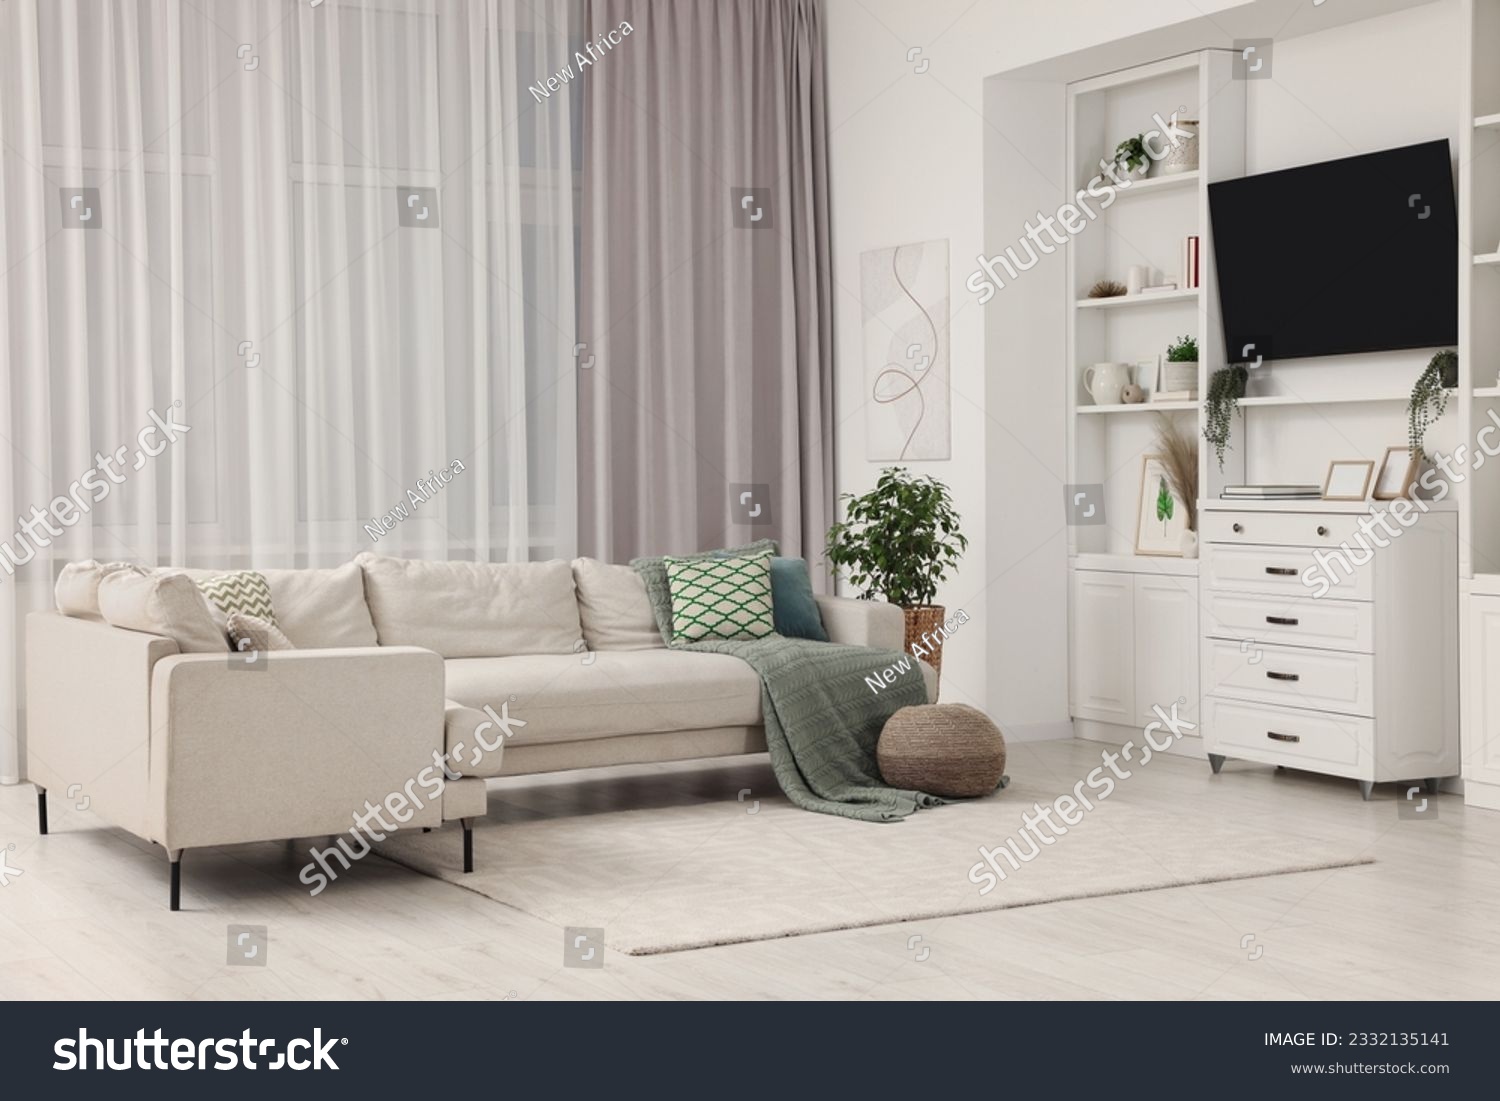 Stylish living room interior with comfortable sofa, TV set and houseplant #2332135141